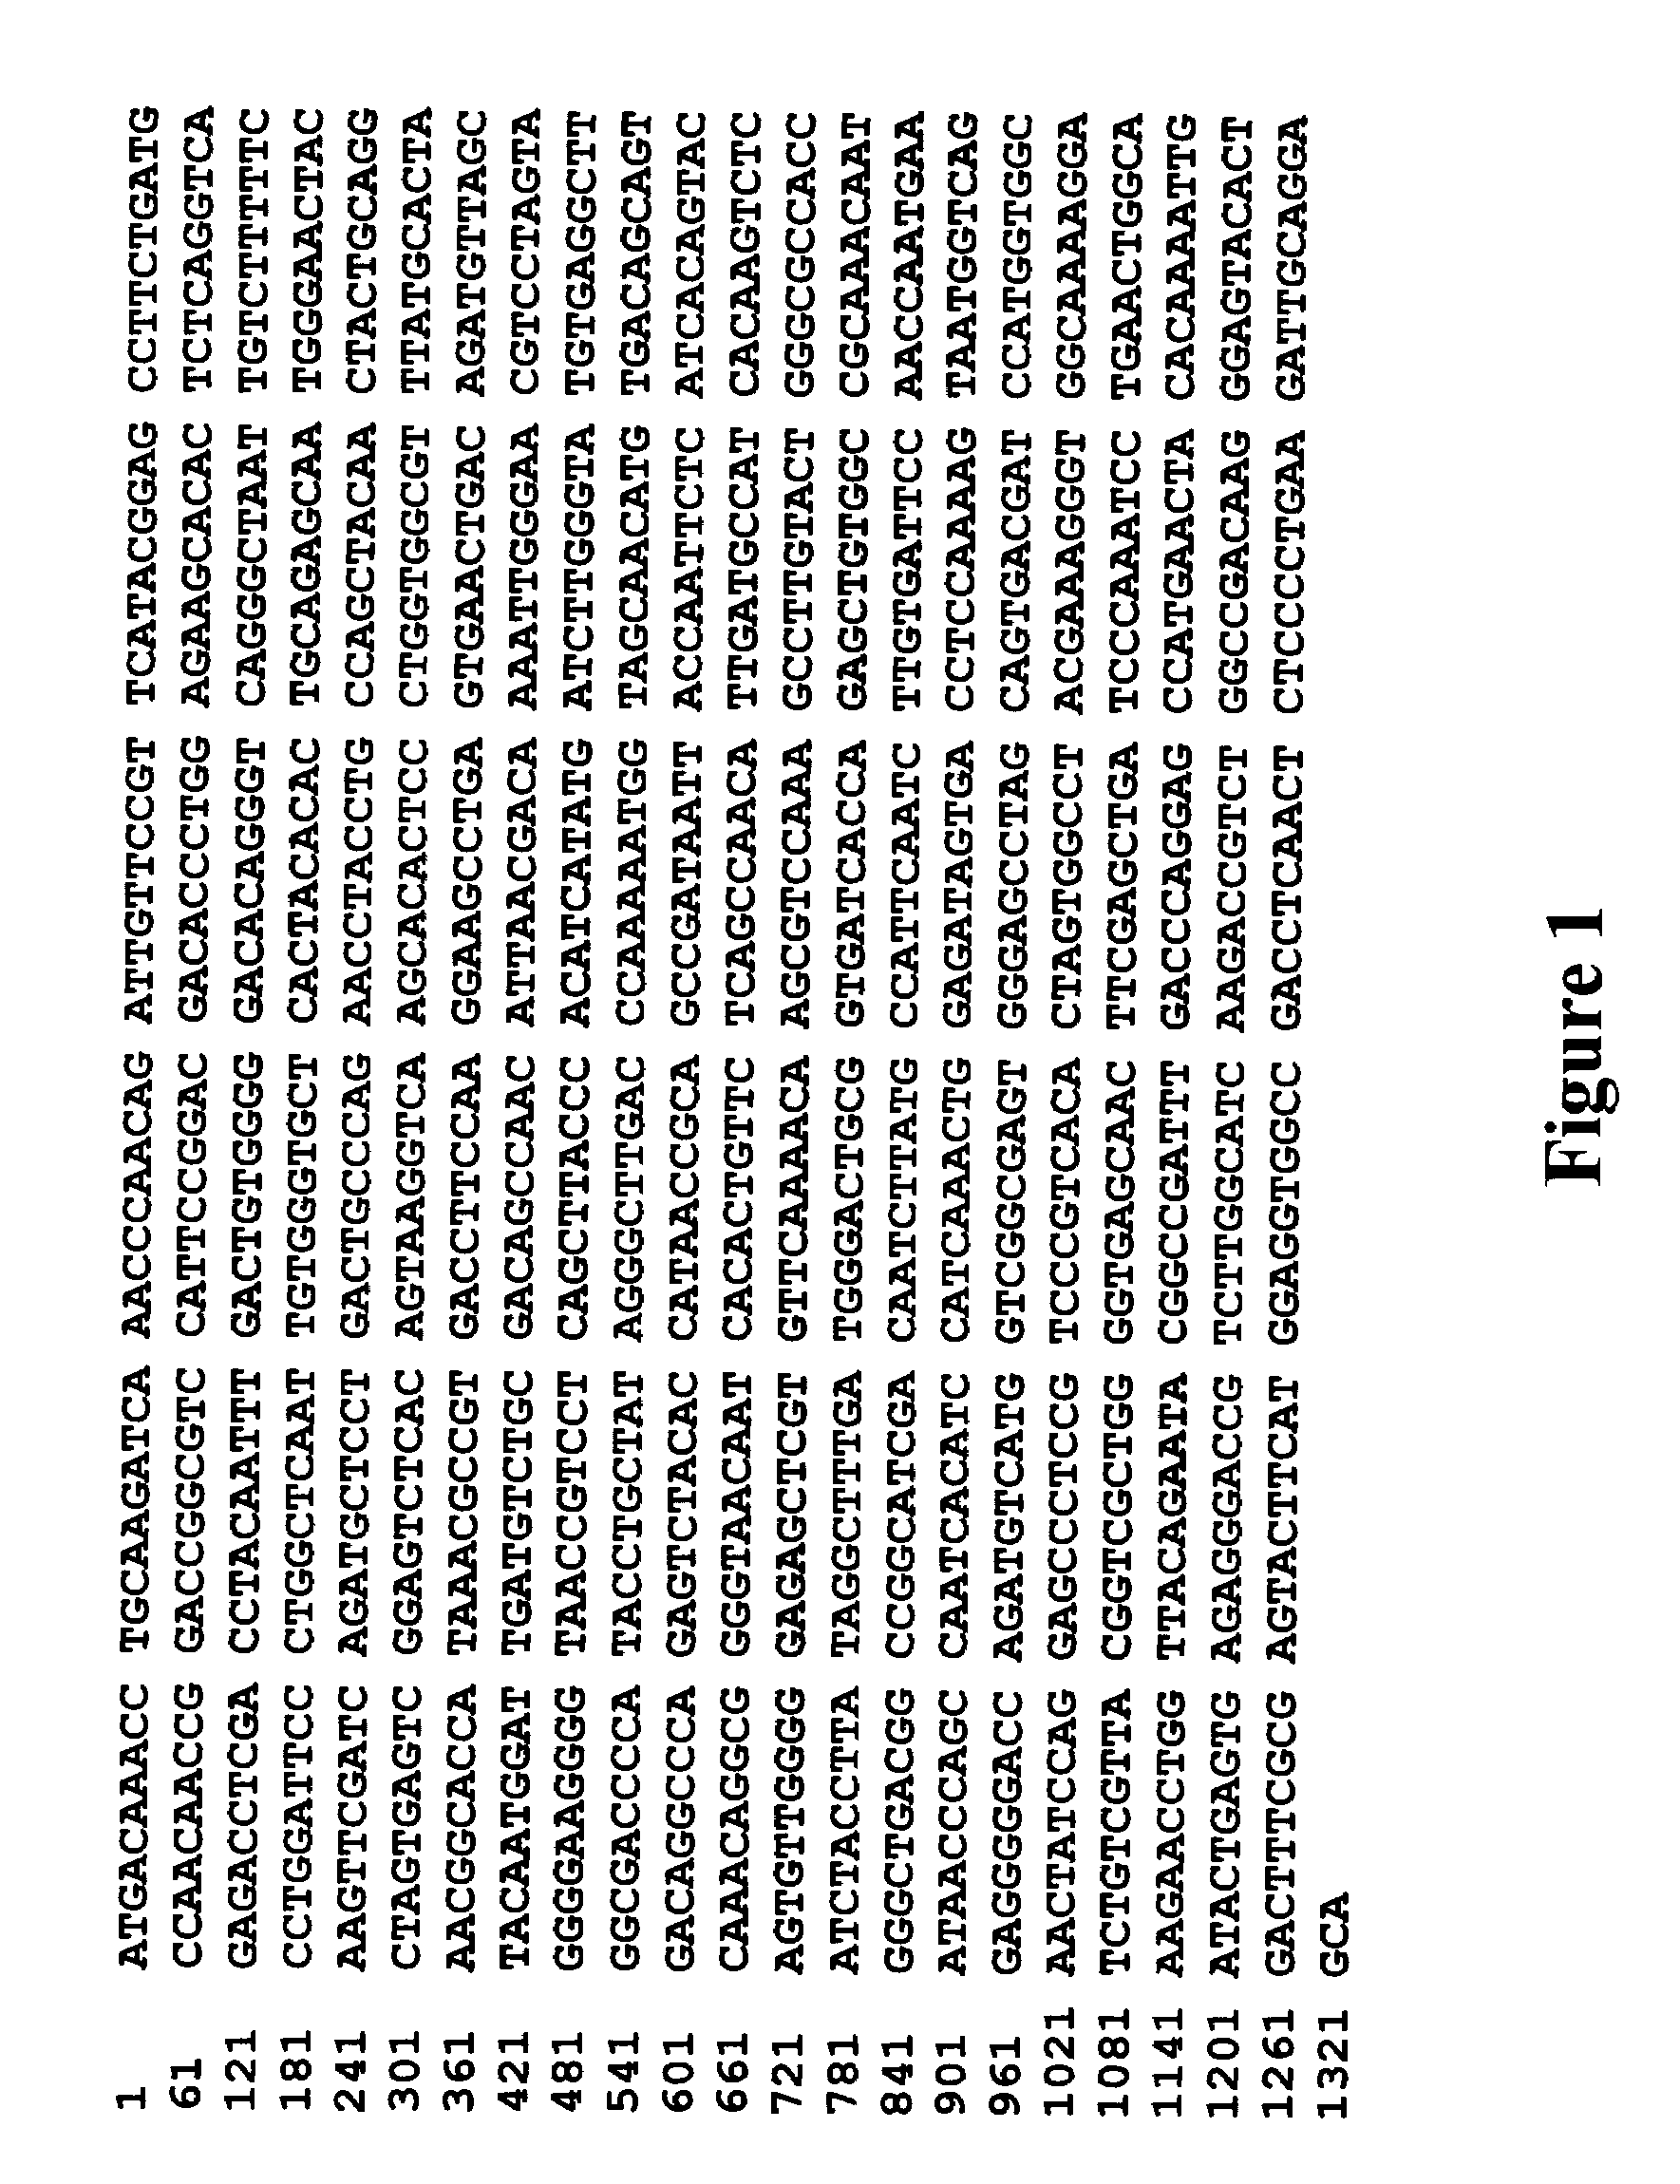 Infectious bursal disease virus (IBDV) variant from Georgia